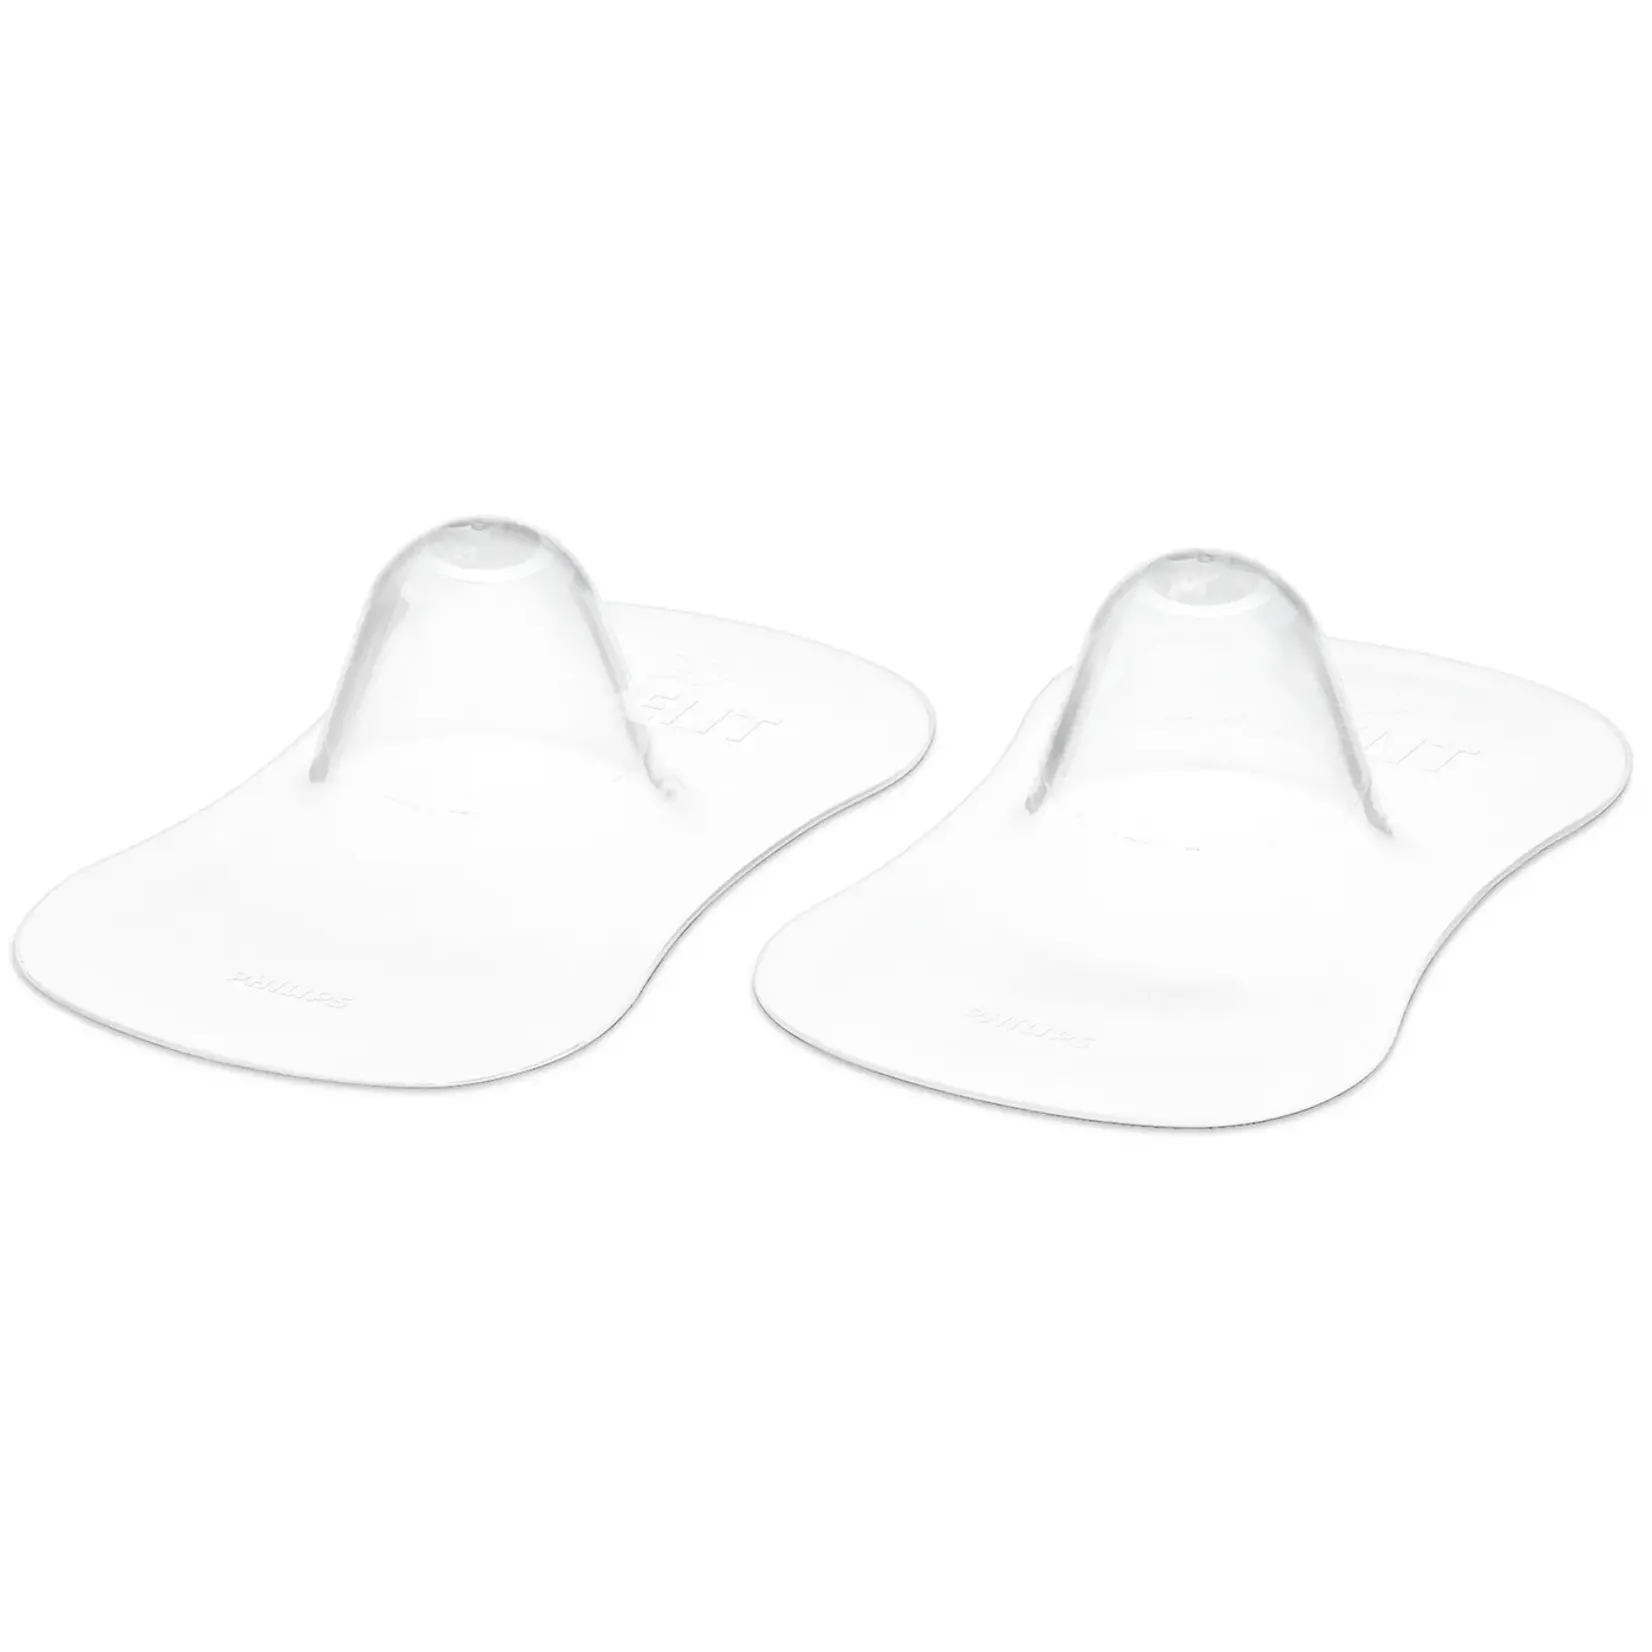 Avent Nipple Shields with storage case, 2 pack, medium